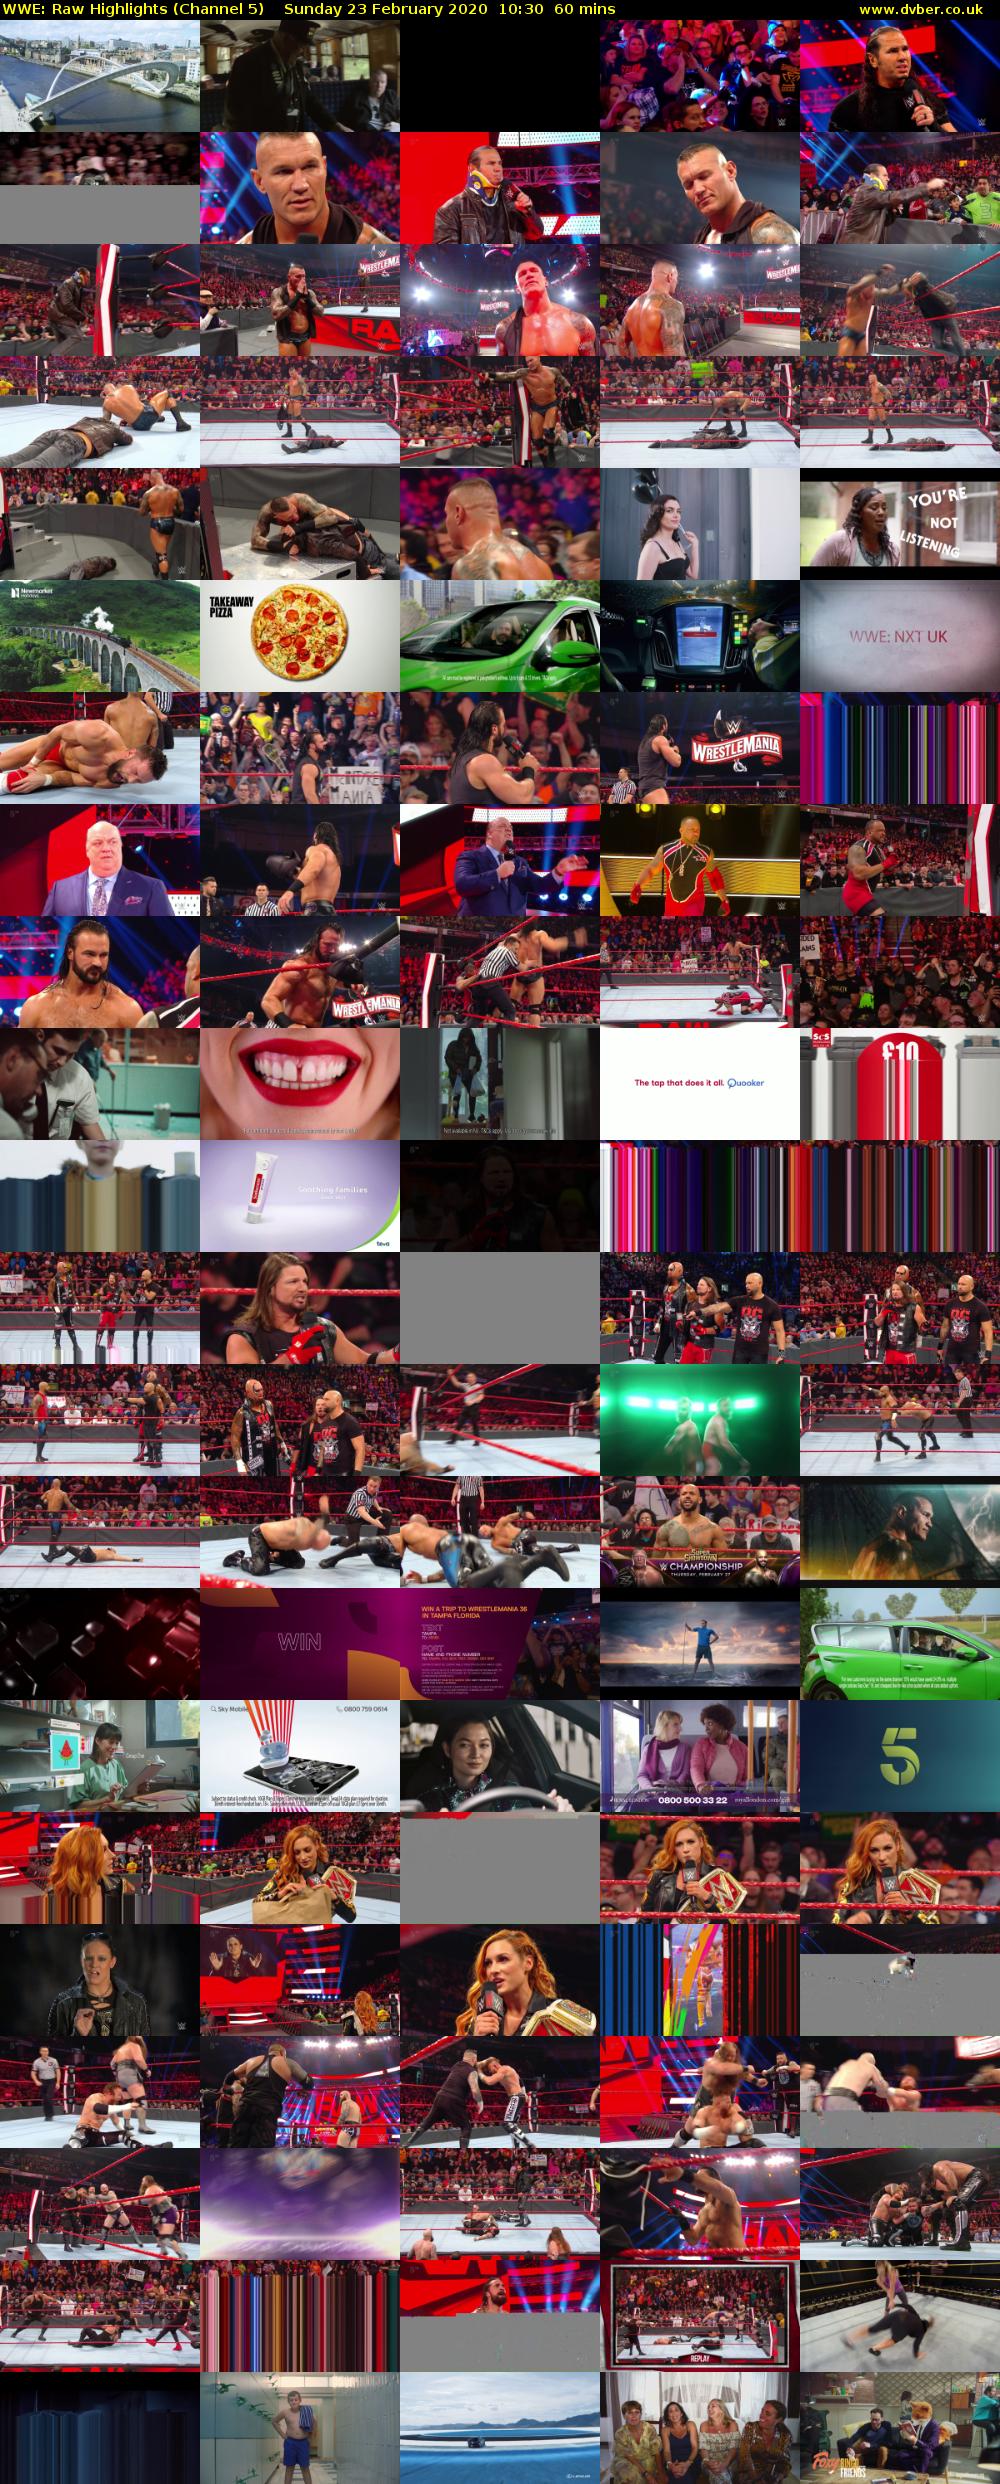 WWE: Raw Highlights (Channel 5) Sunday 23 February 2020 10:30 - 11:30